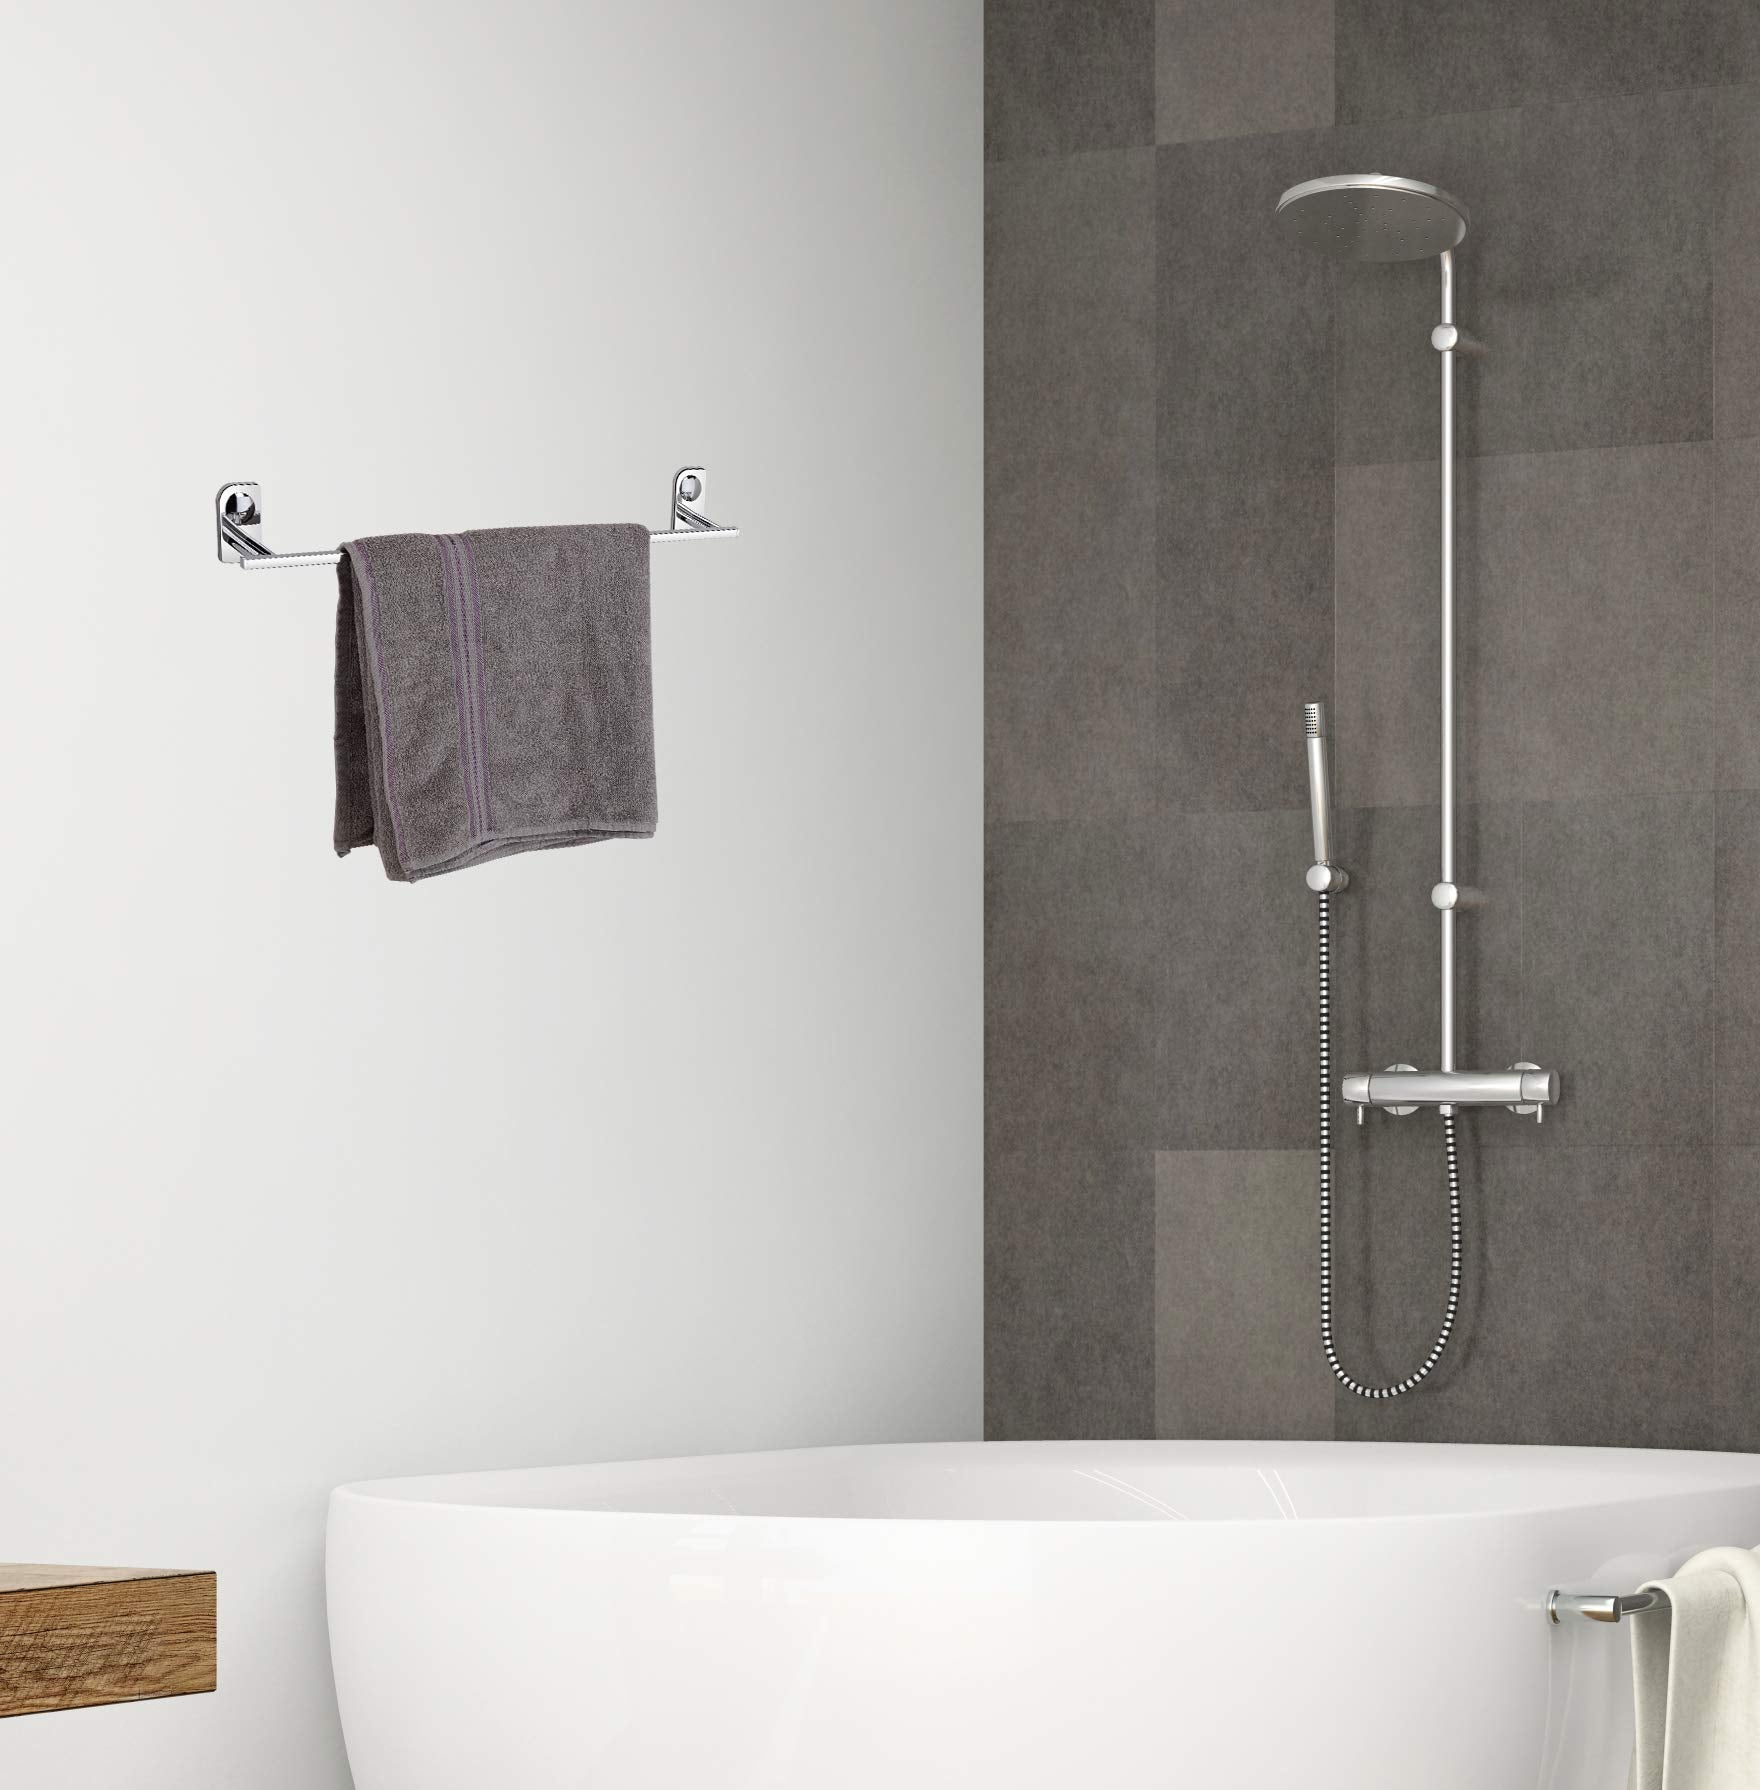 Plantex Dream Stainless Steel Towel Hanger for Bathroom/Towel Rod/Bar/Bathroom Accessories (24-inch/Chrome) - Pack of 2